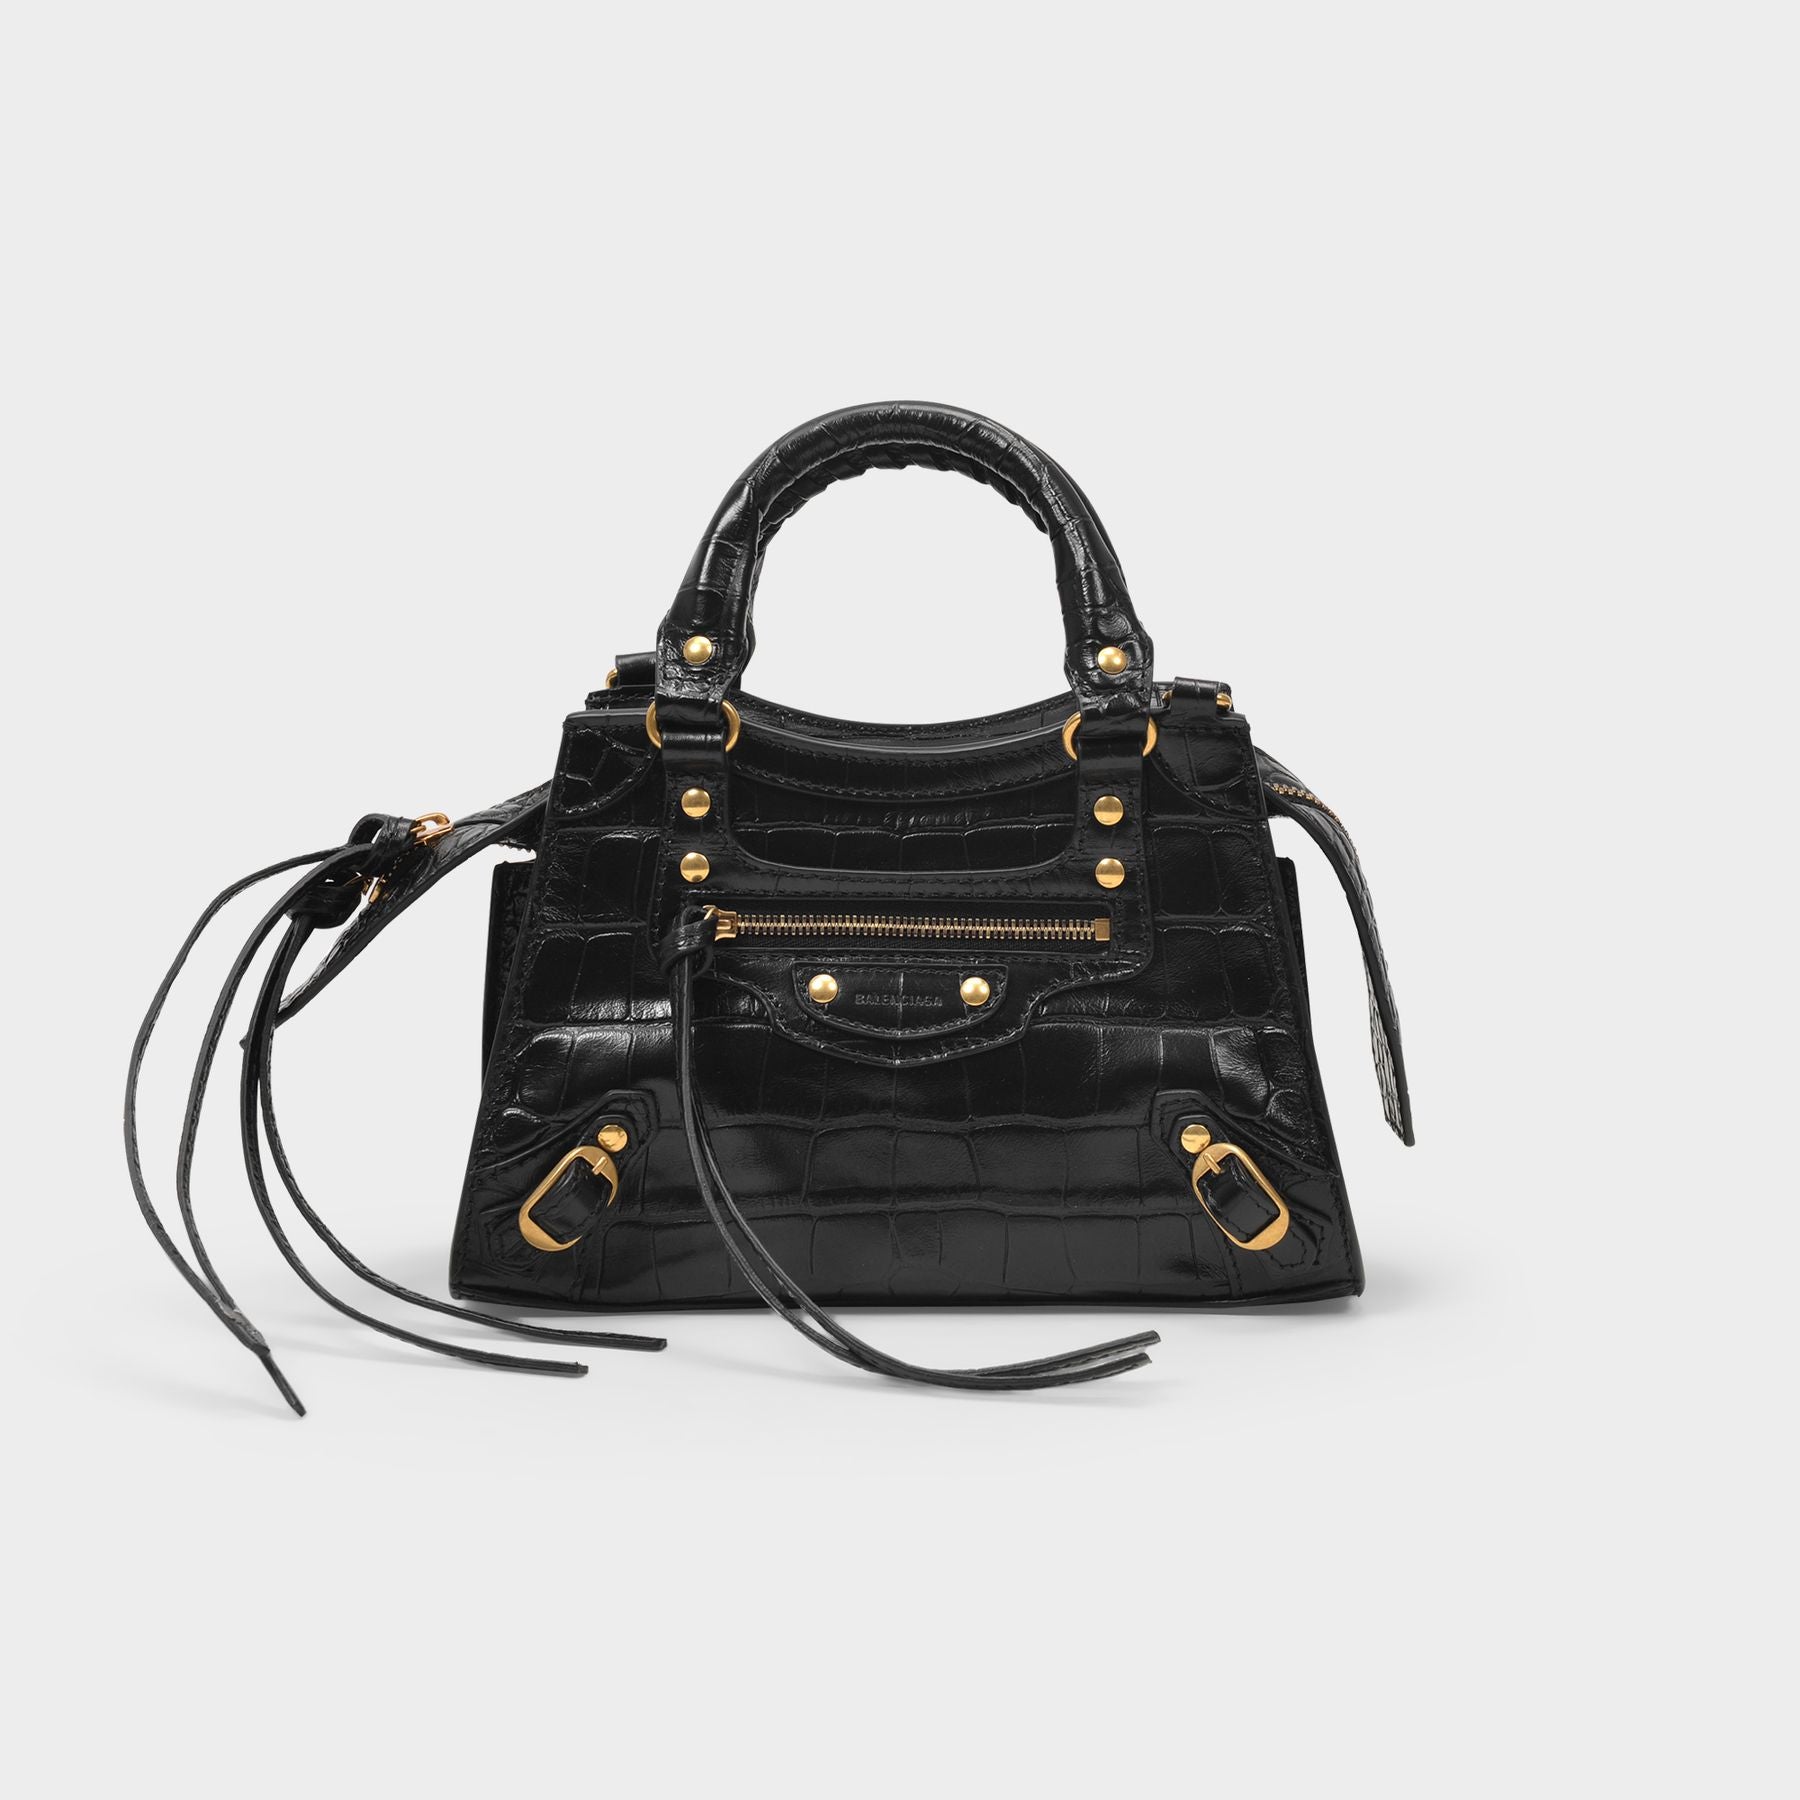 Balenciaga Classic City Handbag in Black Leather